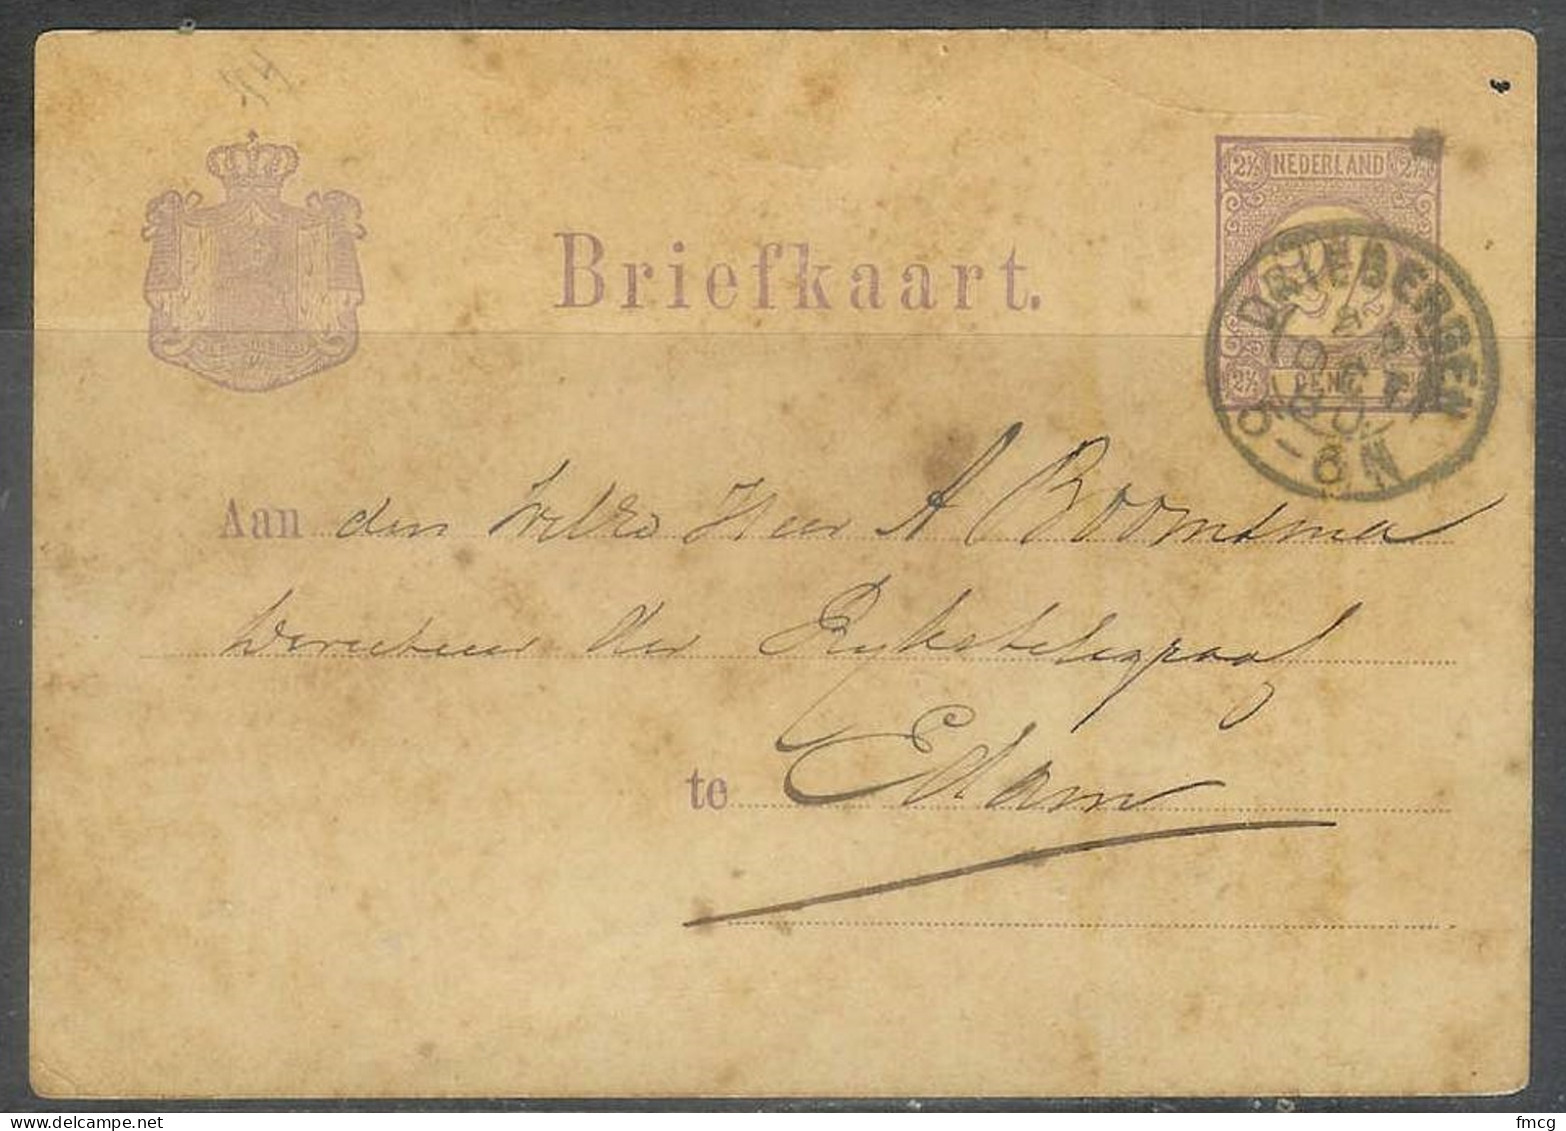 1880 Postal Card Used Driebergen  - Storia Postale